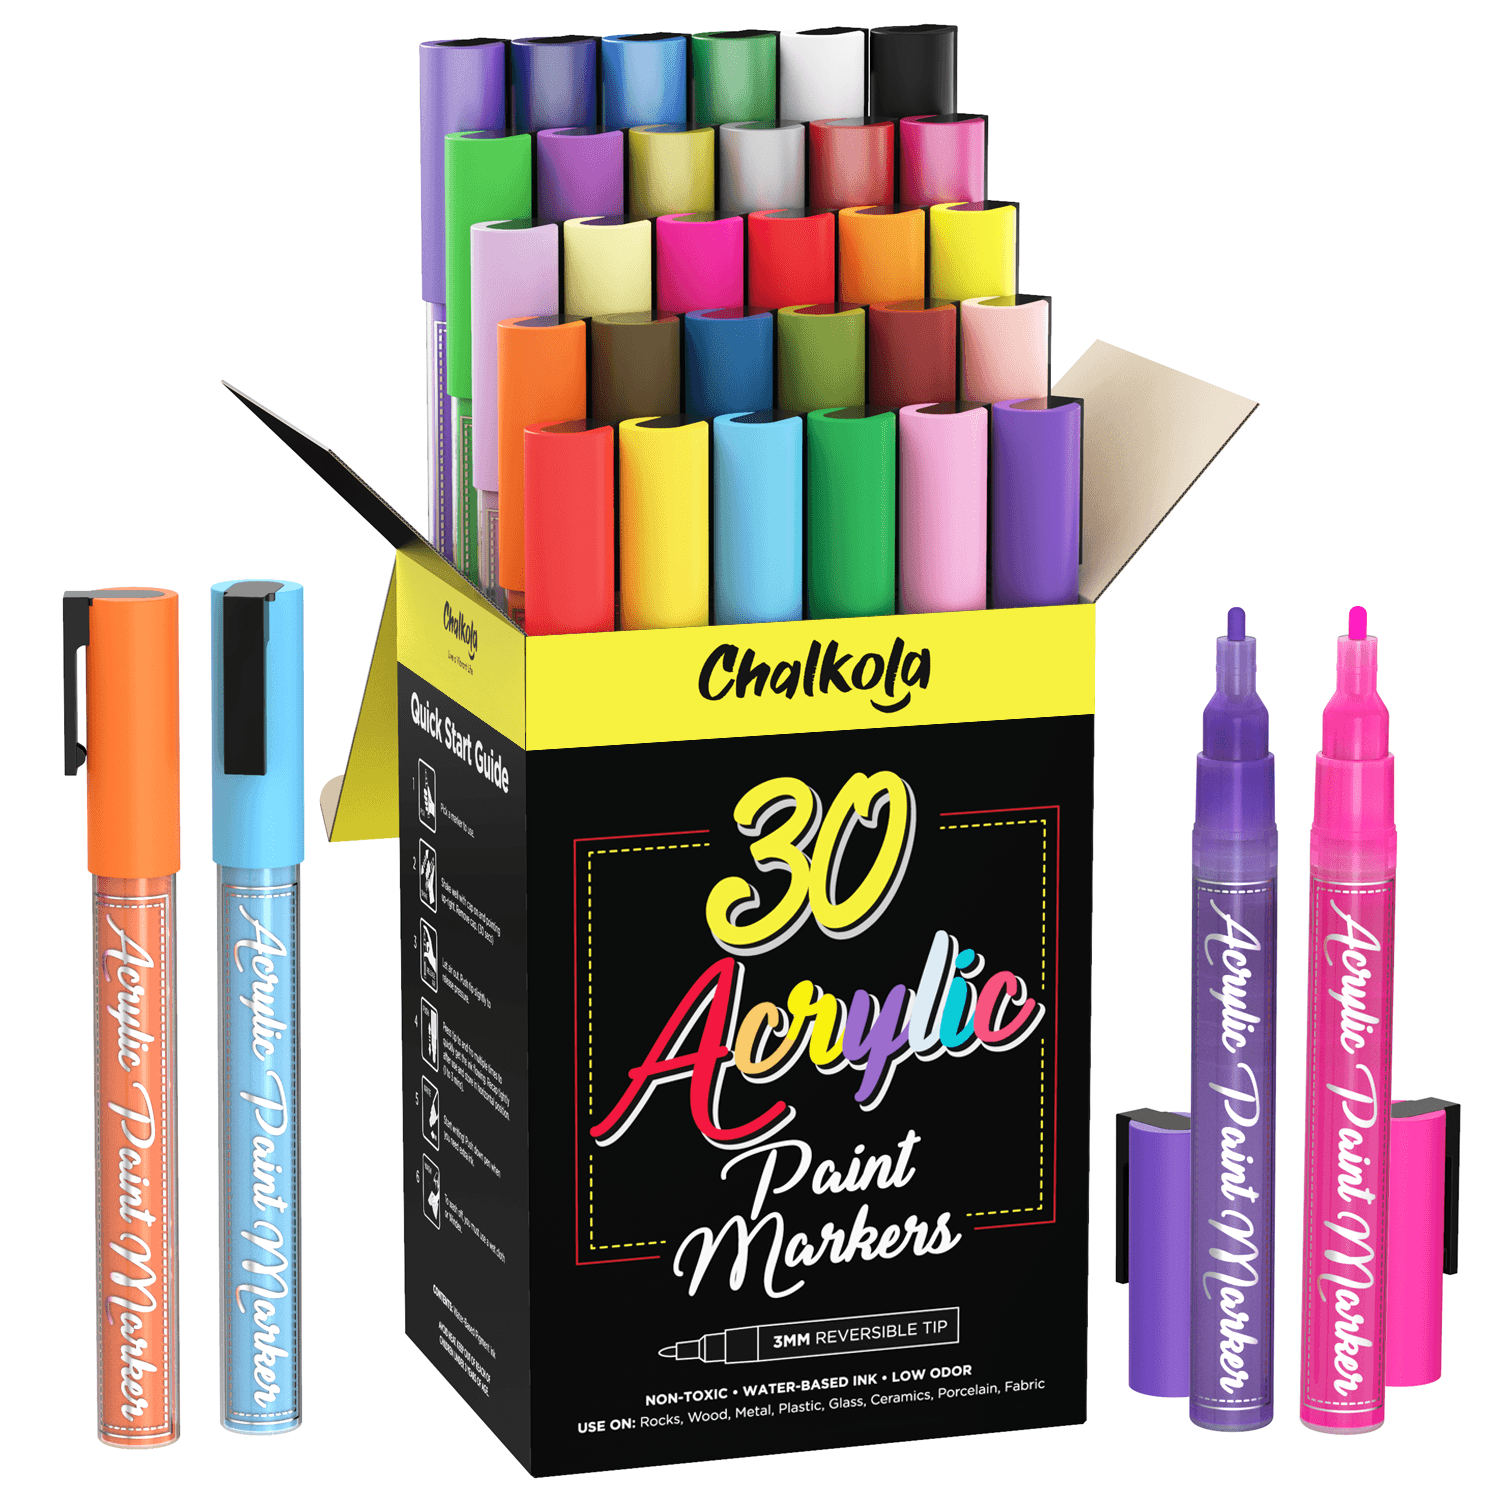 Extra fine tip acrylic paint pens - Set of 30 ultra fine paint pens